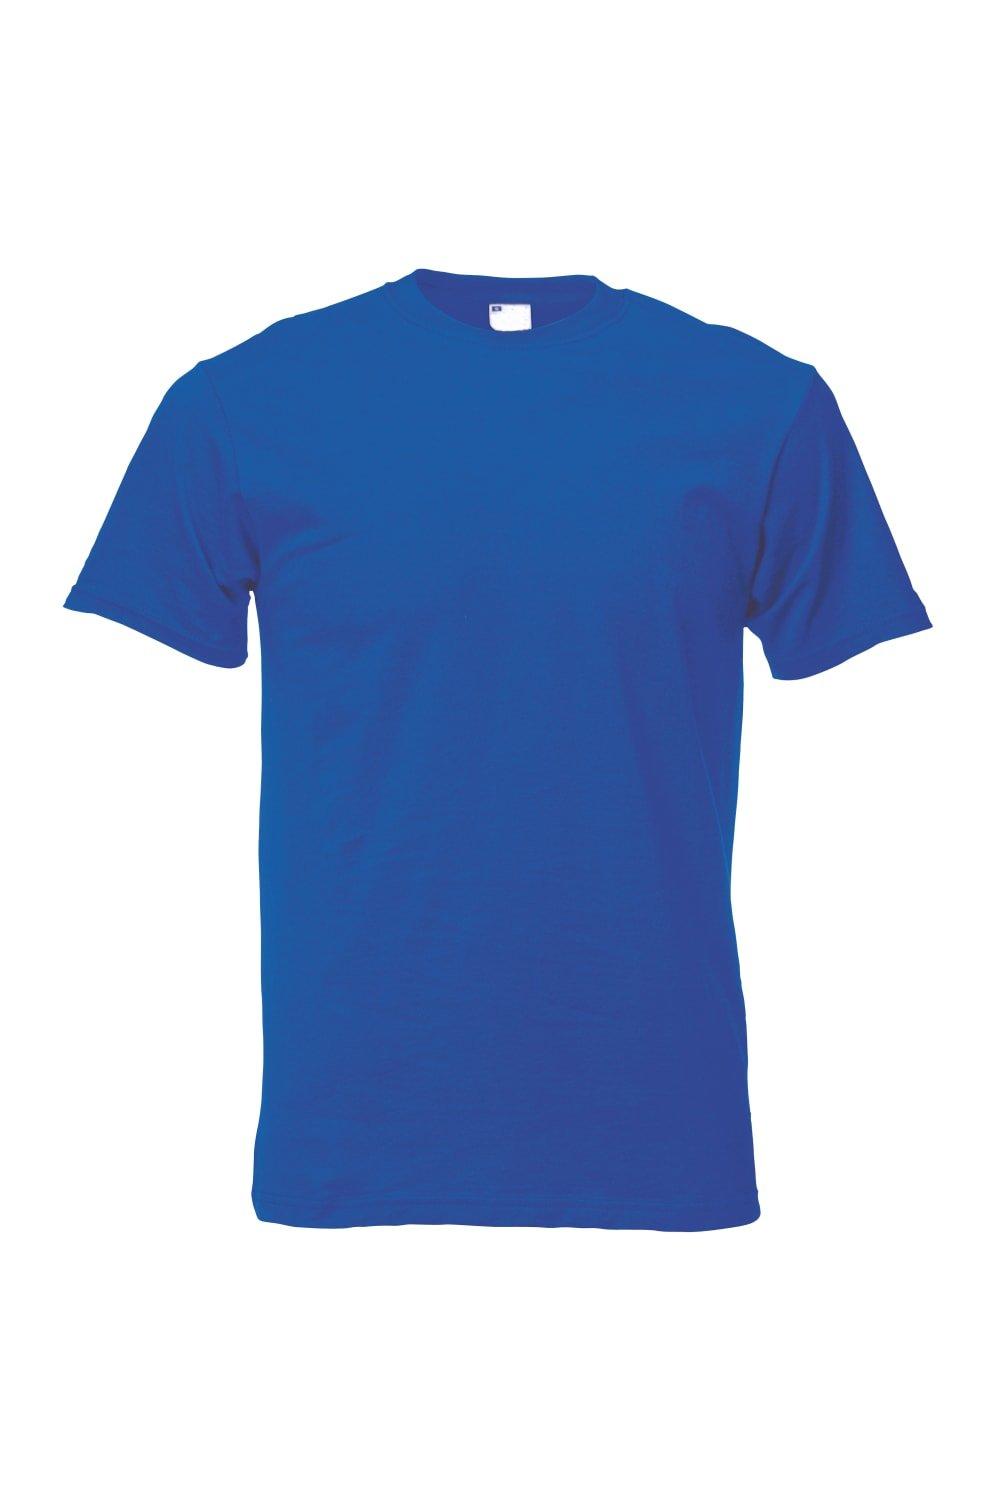 Повседневная футболка с коротким рукавом Universal Textiles, синий мужская футболка ретро кассета 2xl серый меланж